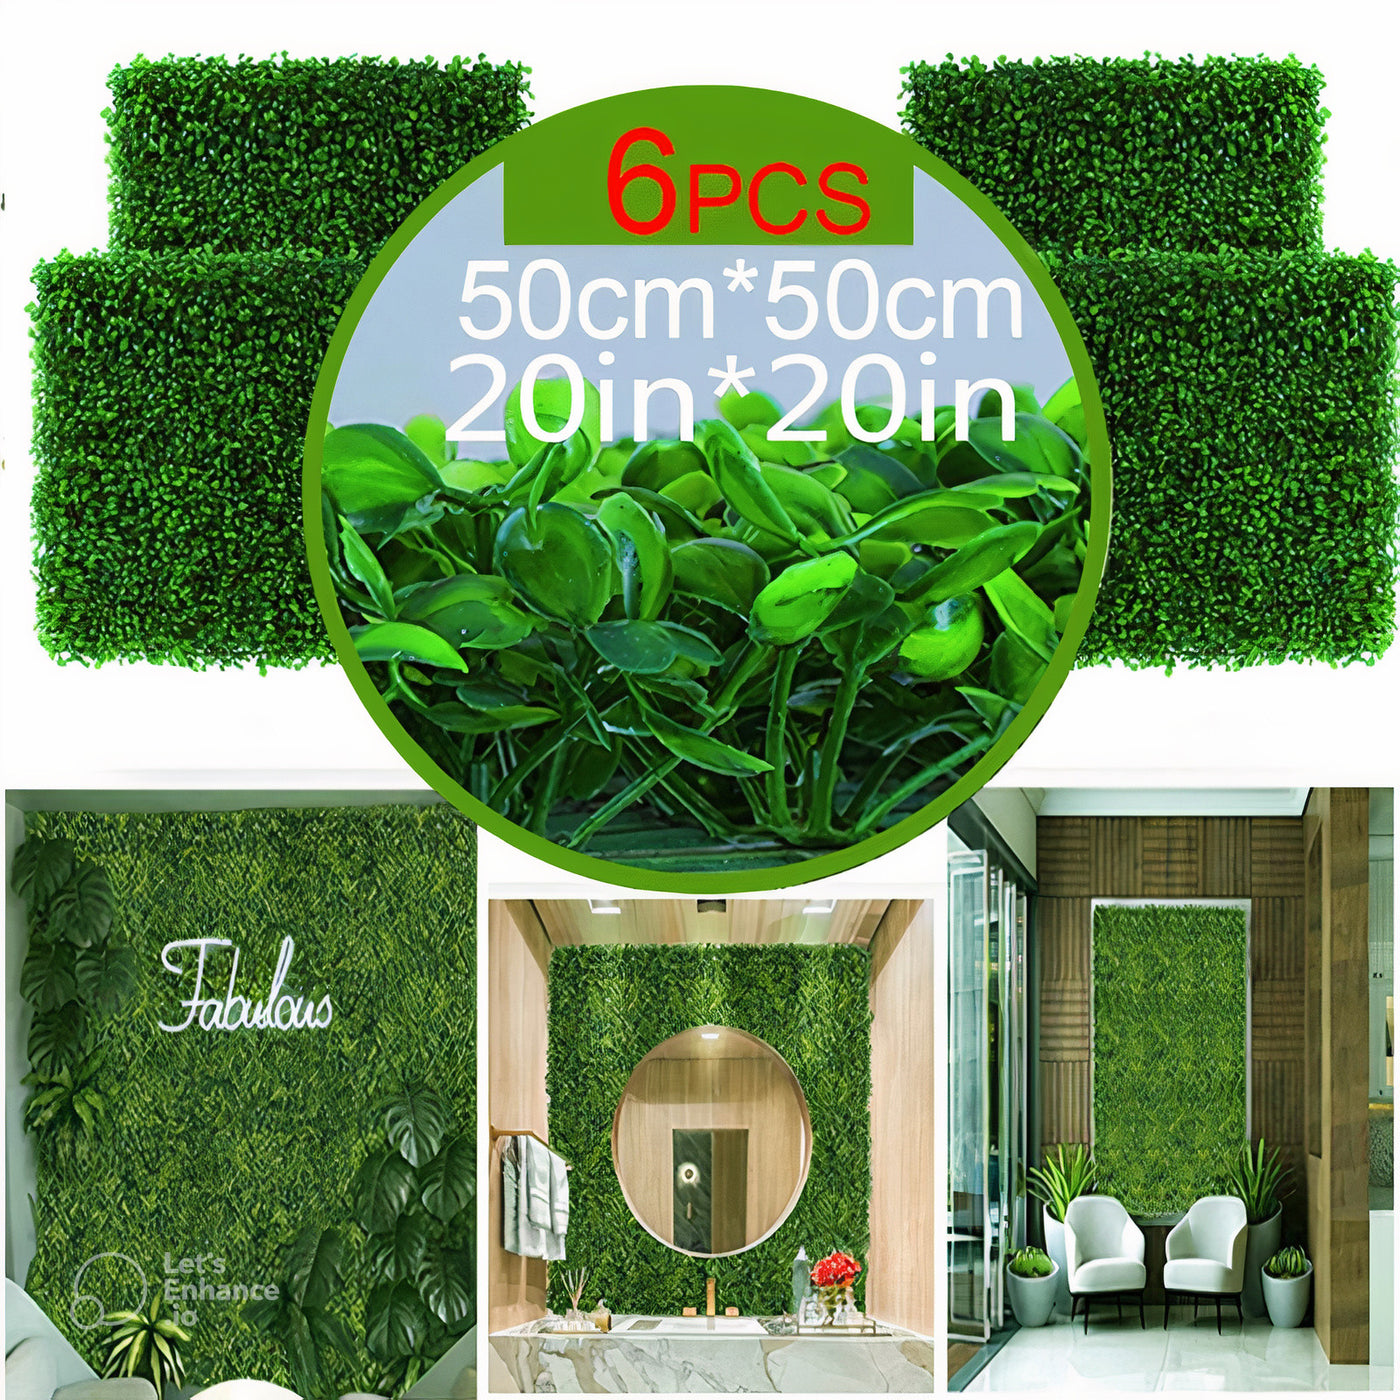 6pcs 20"x20" Artificial Plants Grass Wall Panel